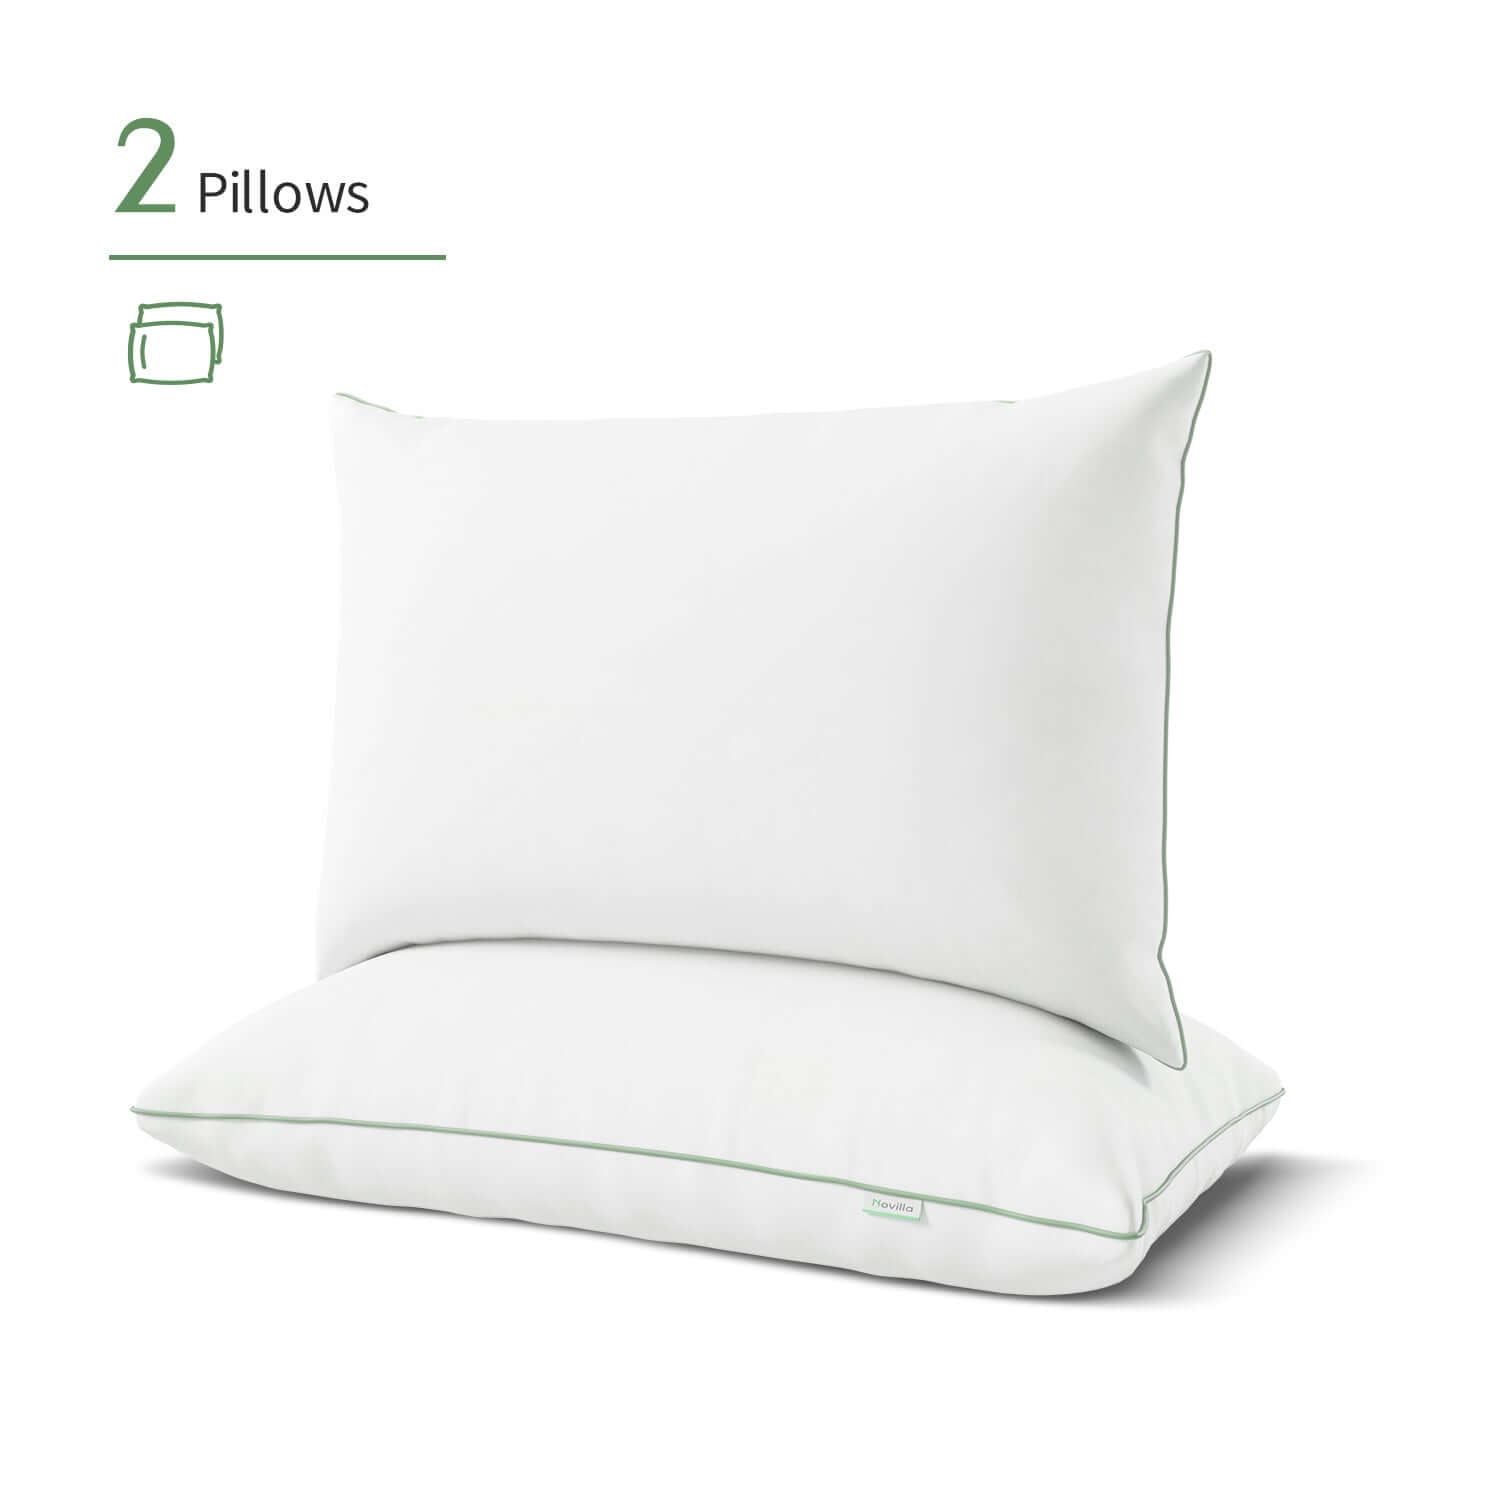 Novilla Down Alternative Pillow*2